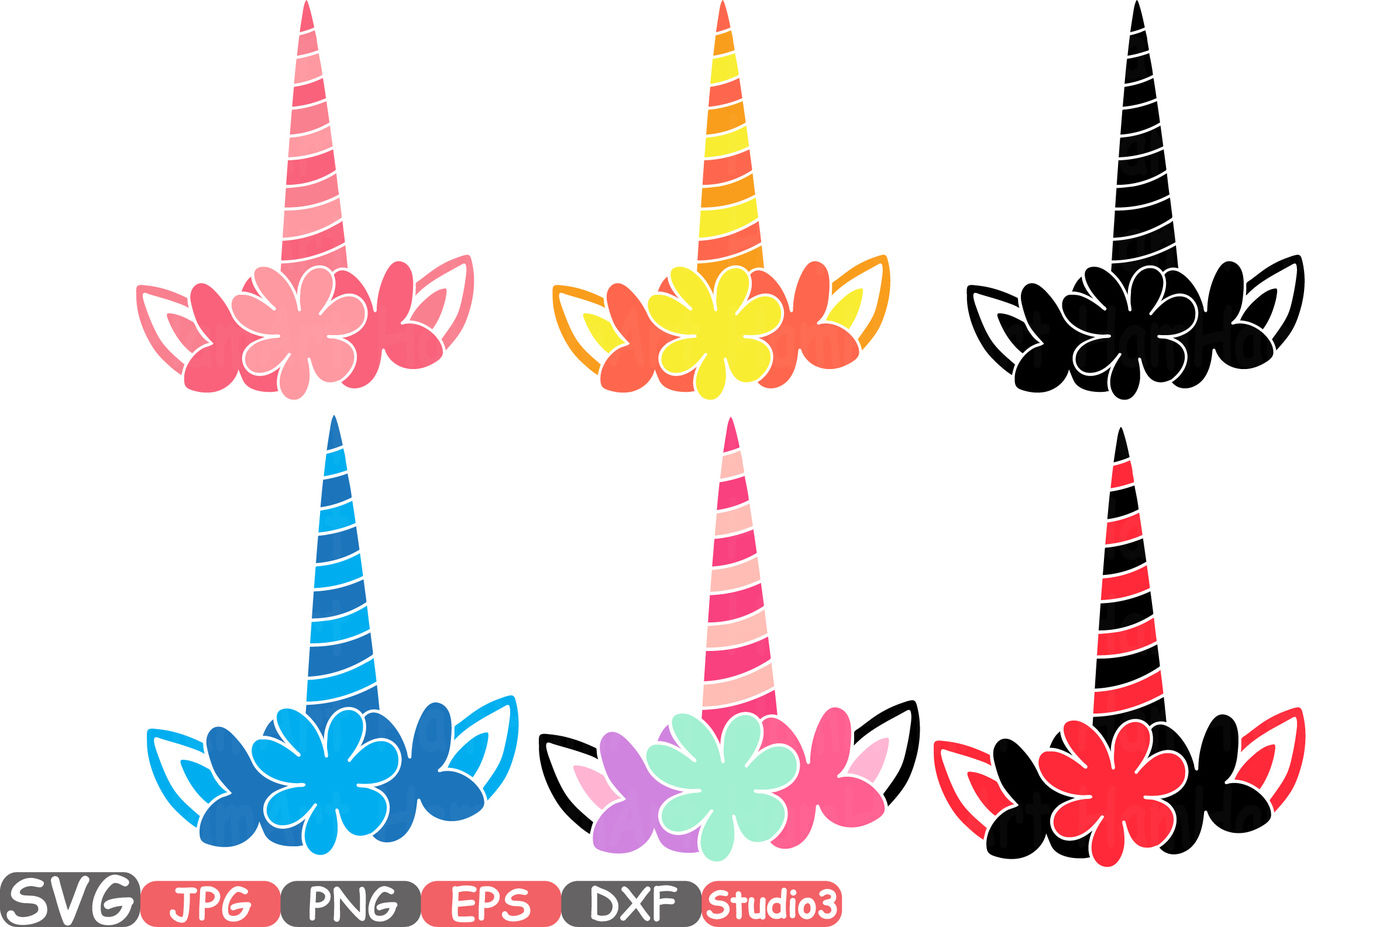 Download Flower Unicorn Monogram Silhouette Svg Cutting Files Digital Clip Art Graphic Studio3 Cricut Cuttable Die Cut Machines Birthday 43sv By Hamhamart Thehungryjpeg Com